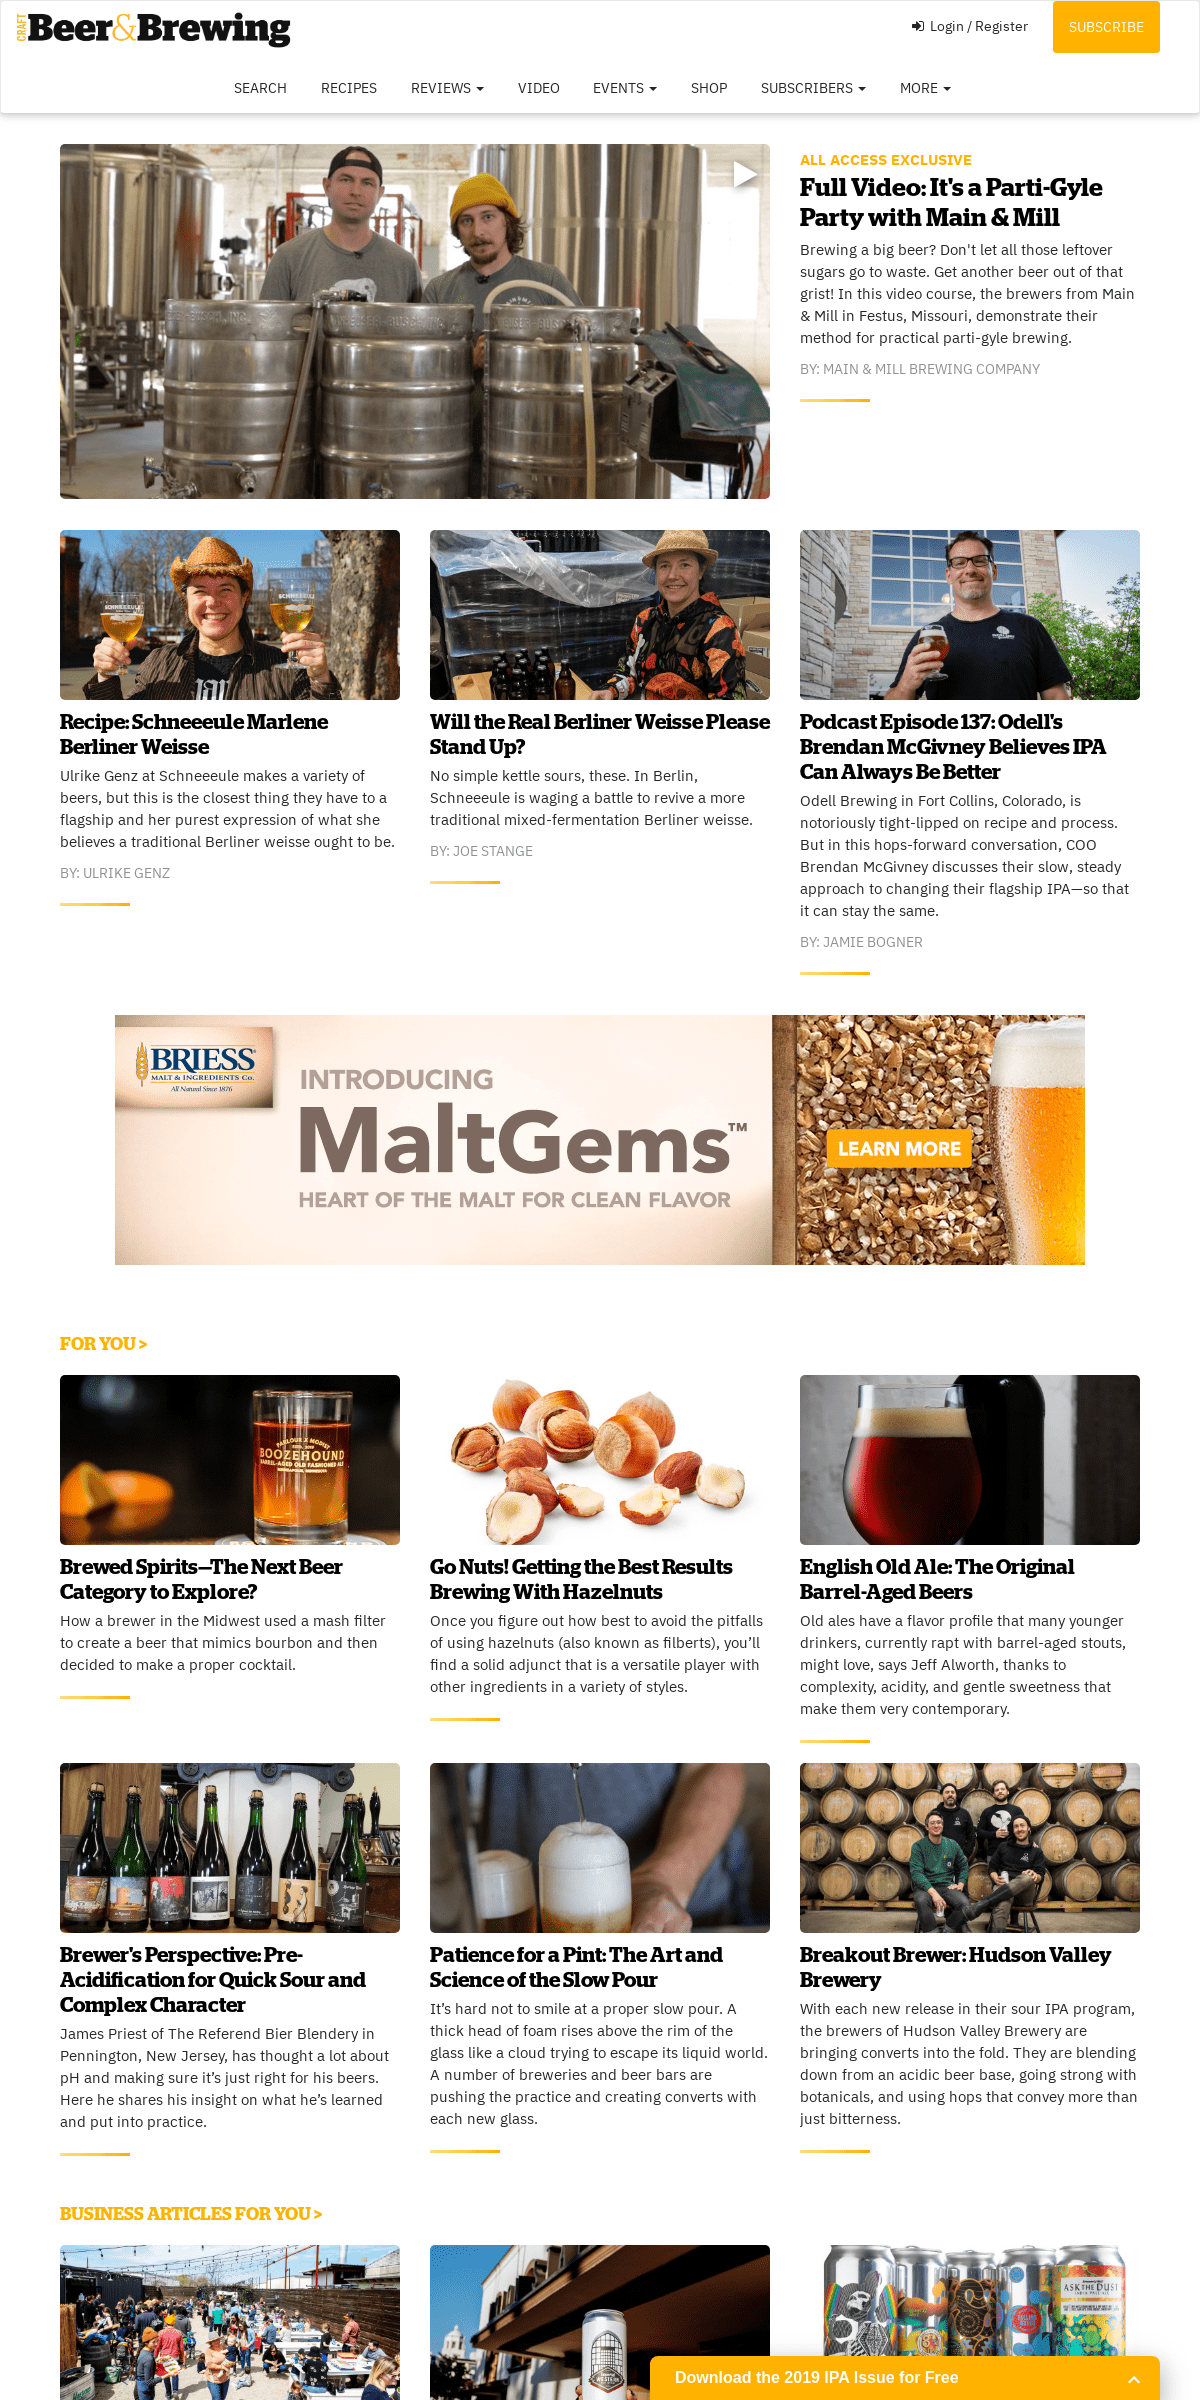 A complete backup of beerandbrewing.com